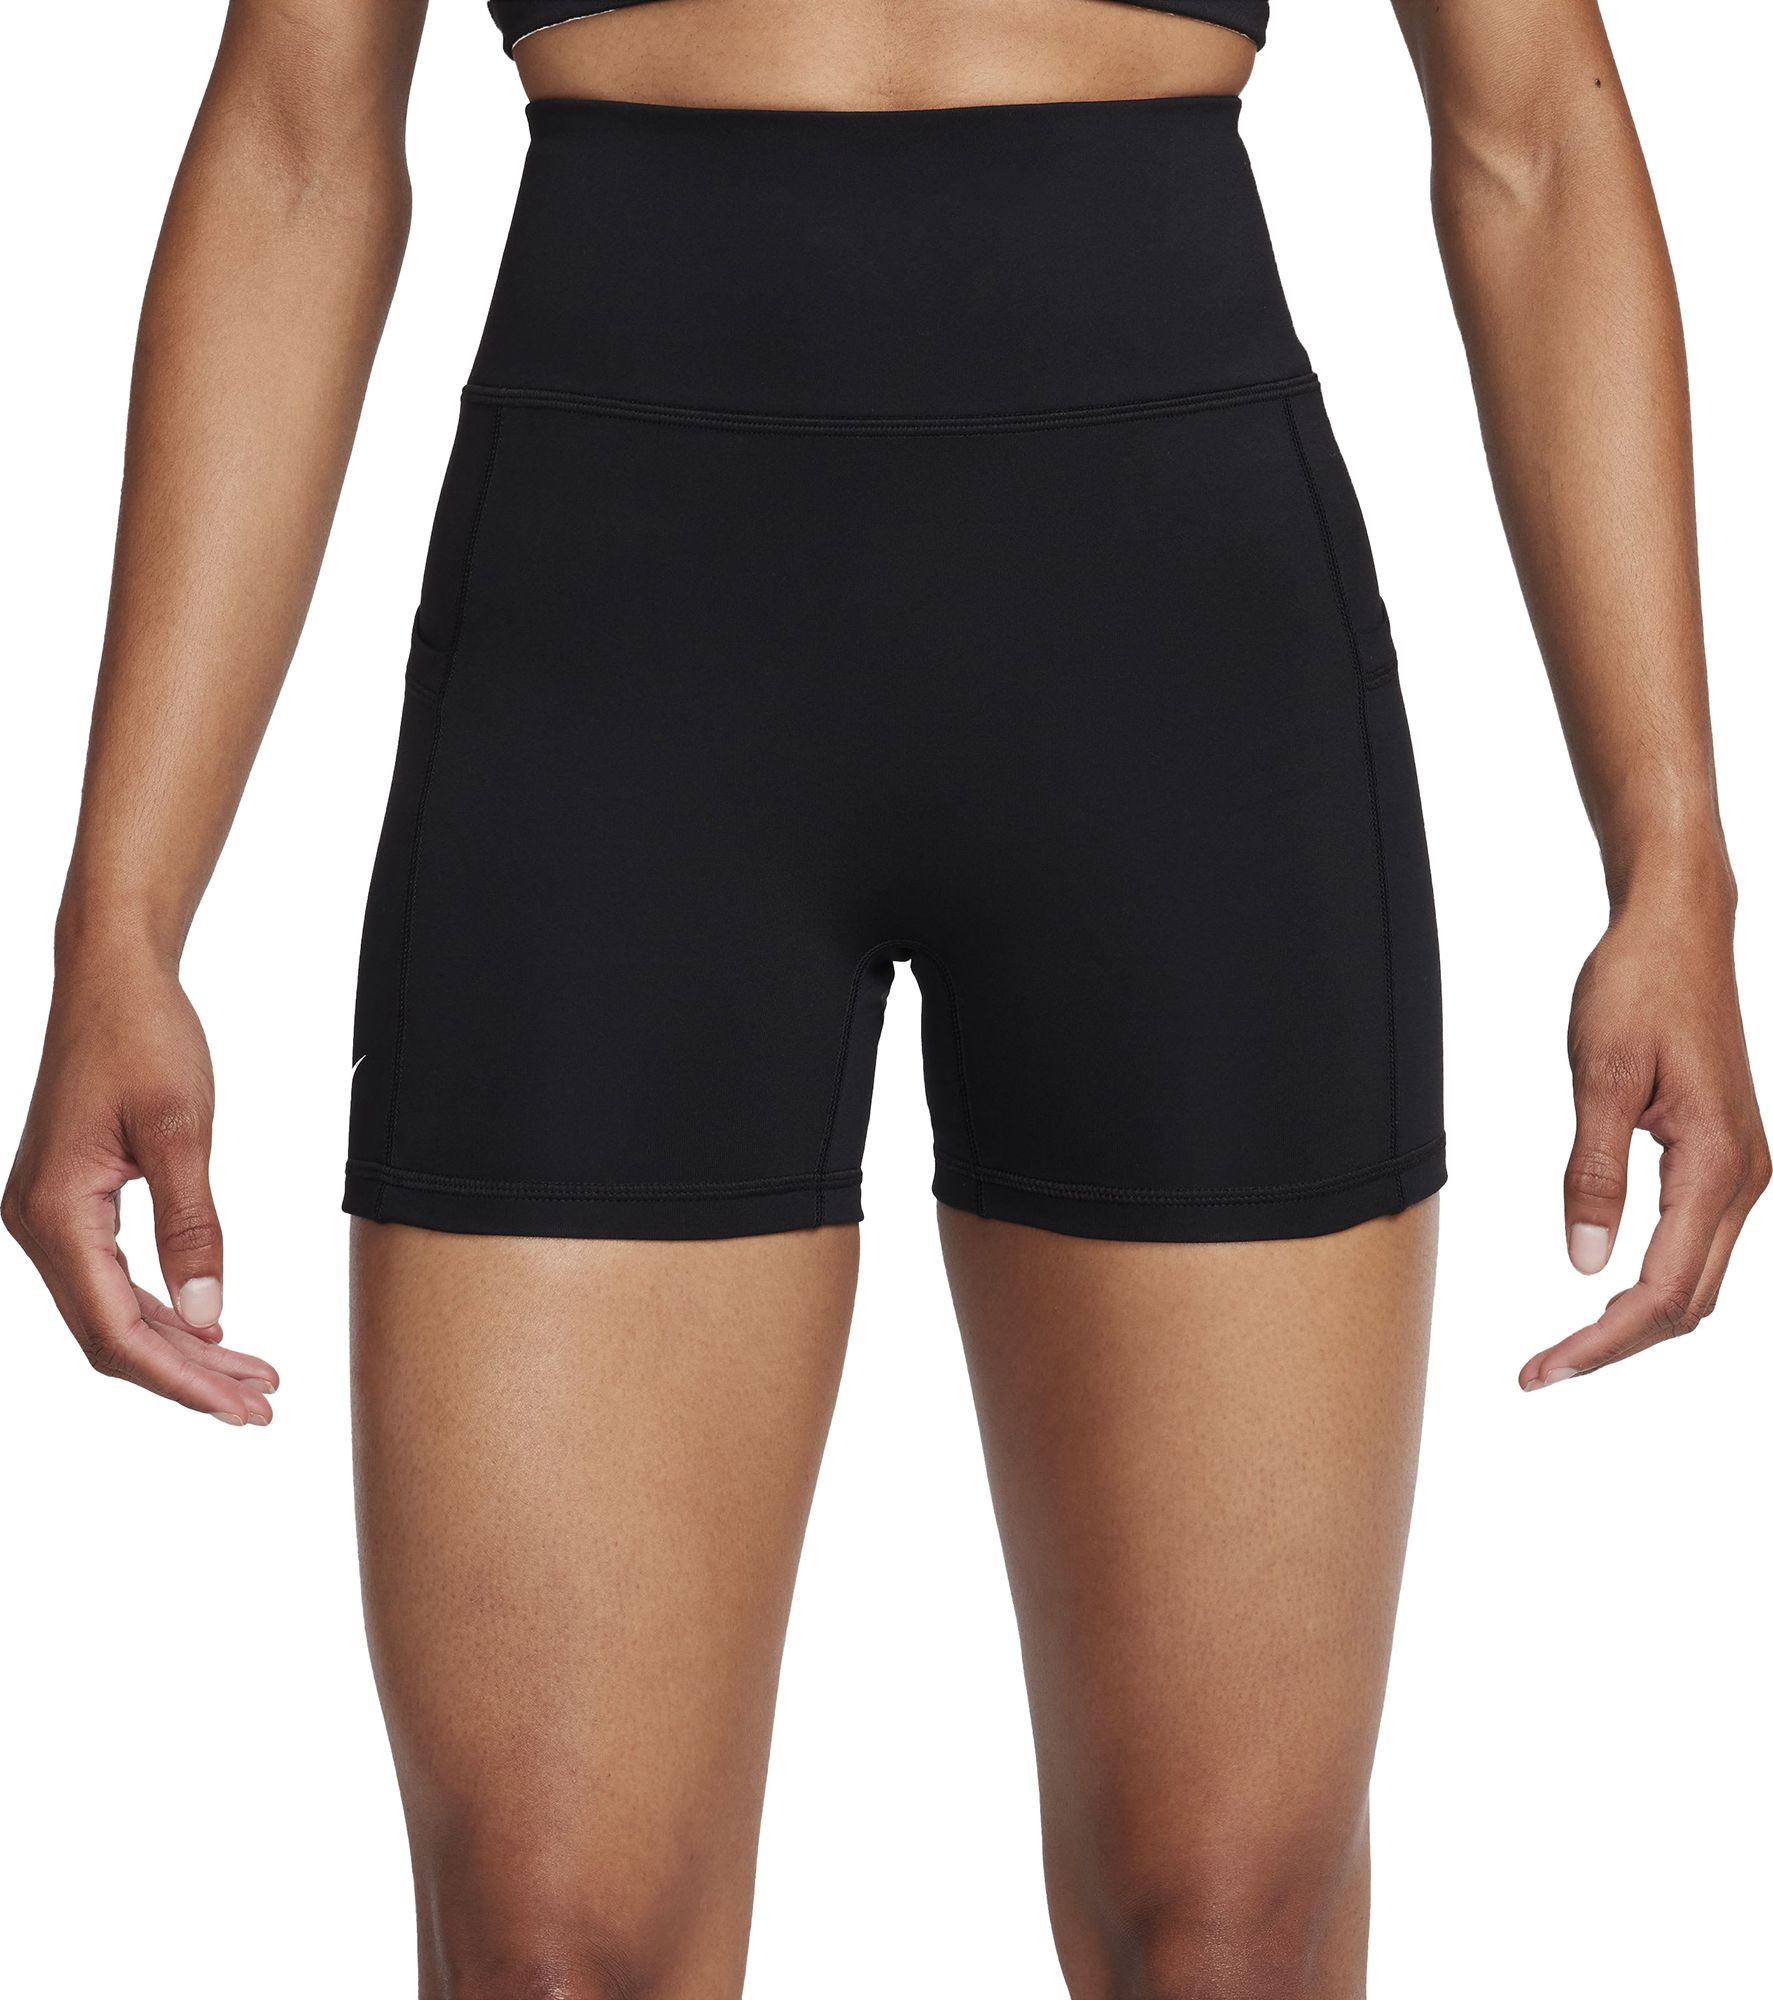 Nike Women's NikeCourt Dri-FIT Advantage Tennis Ball Shorts